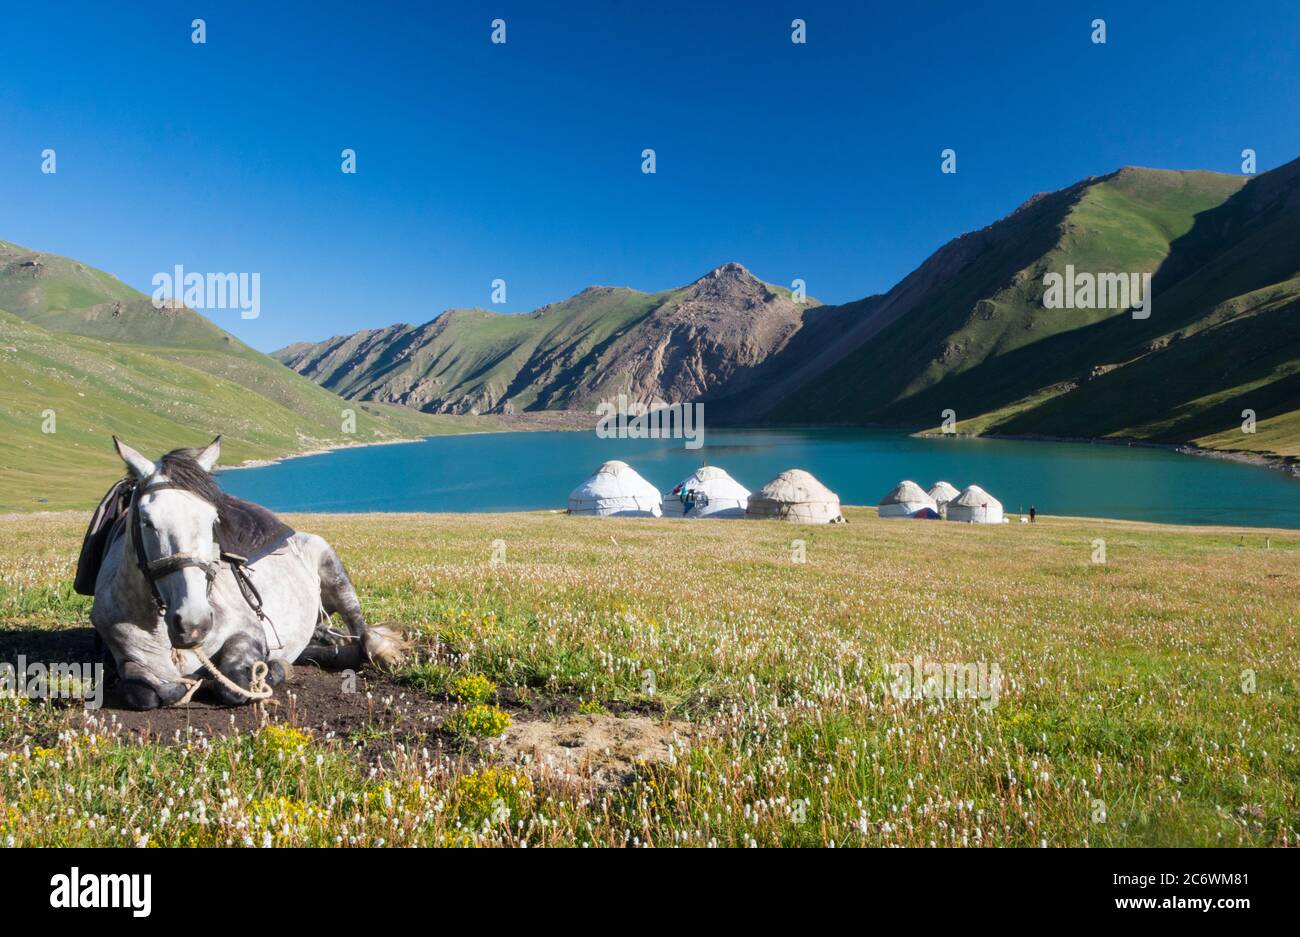 Liegend Pferd und Jurten in der Nähe des Sees in Yian Shan. Kirgisistan Stockfoto